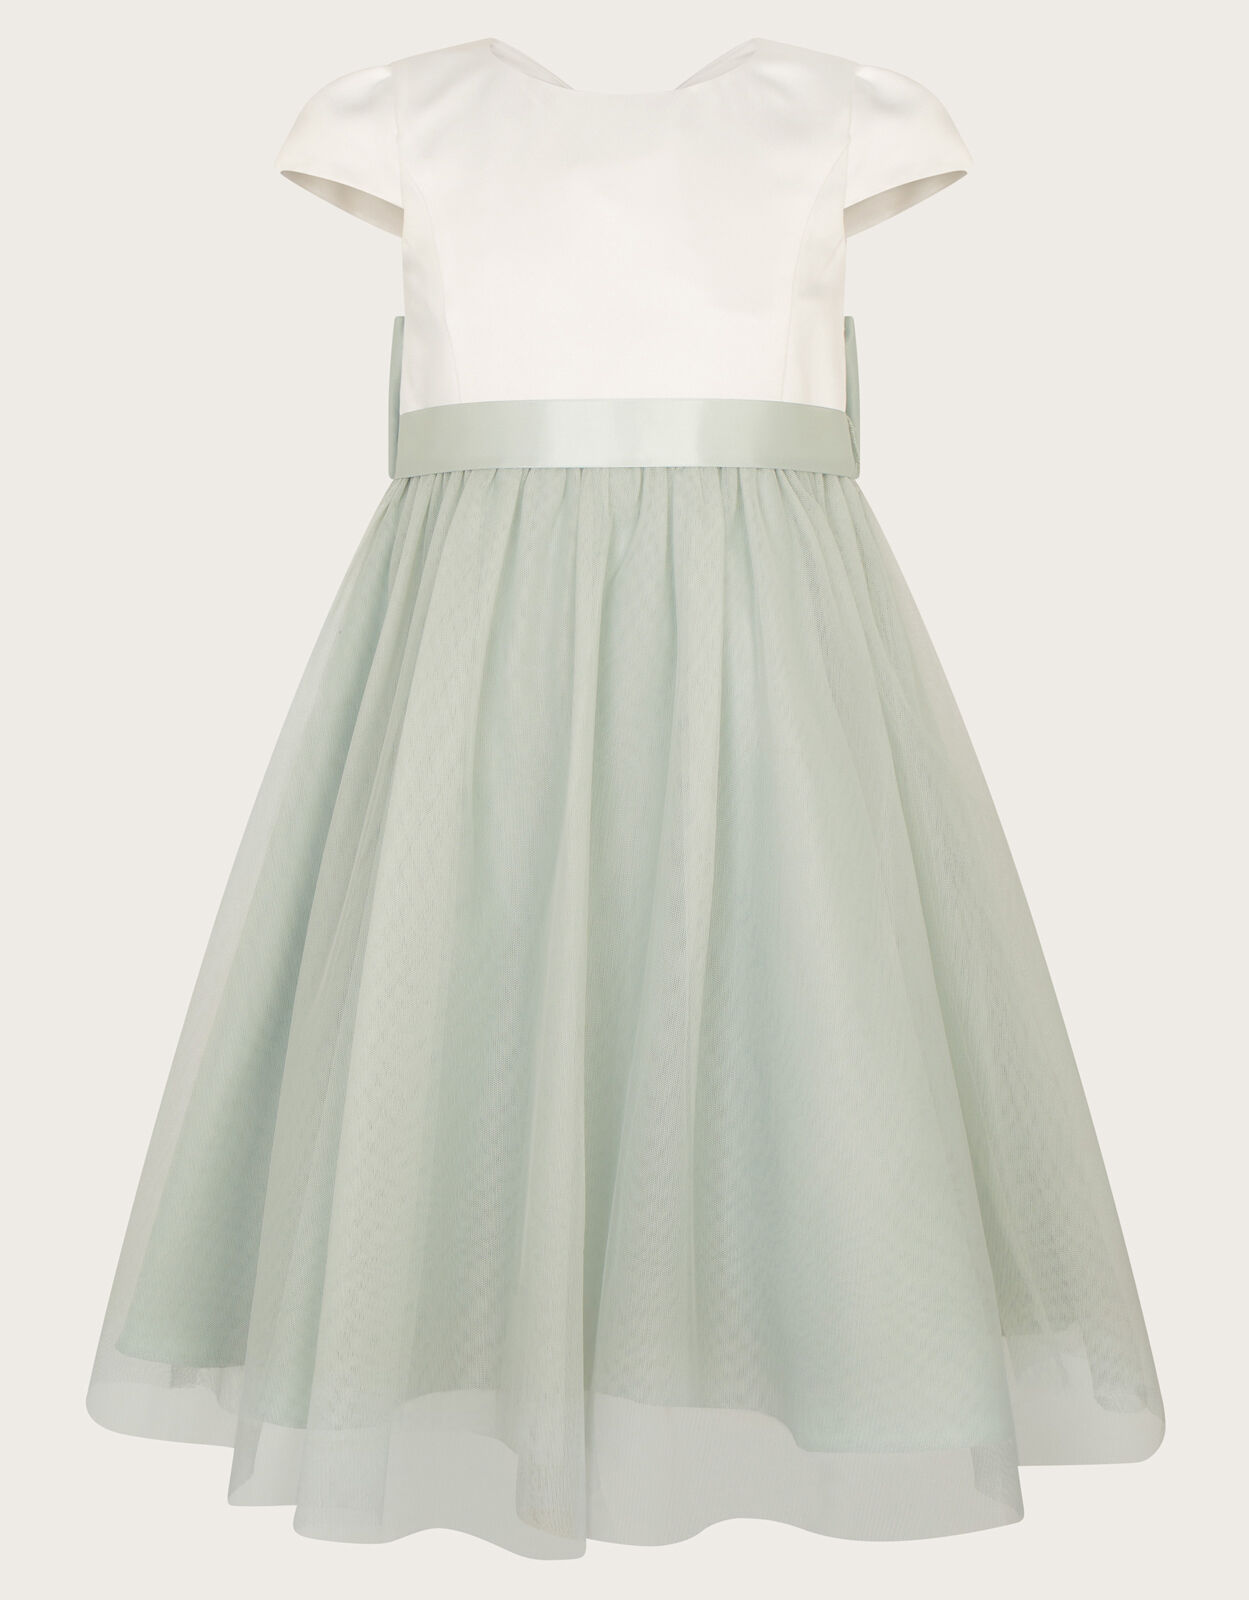 Girls' dresses | Dresses for kids | UNIQLO UK